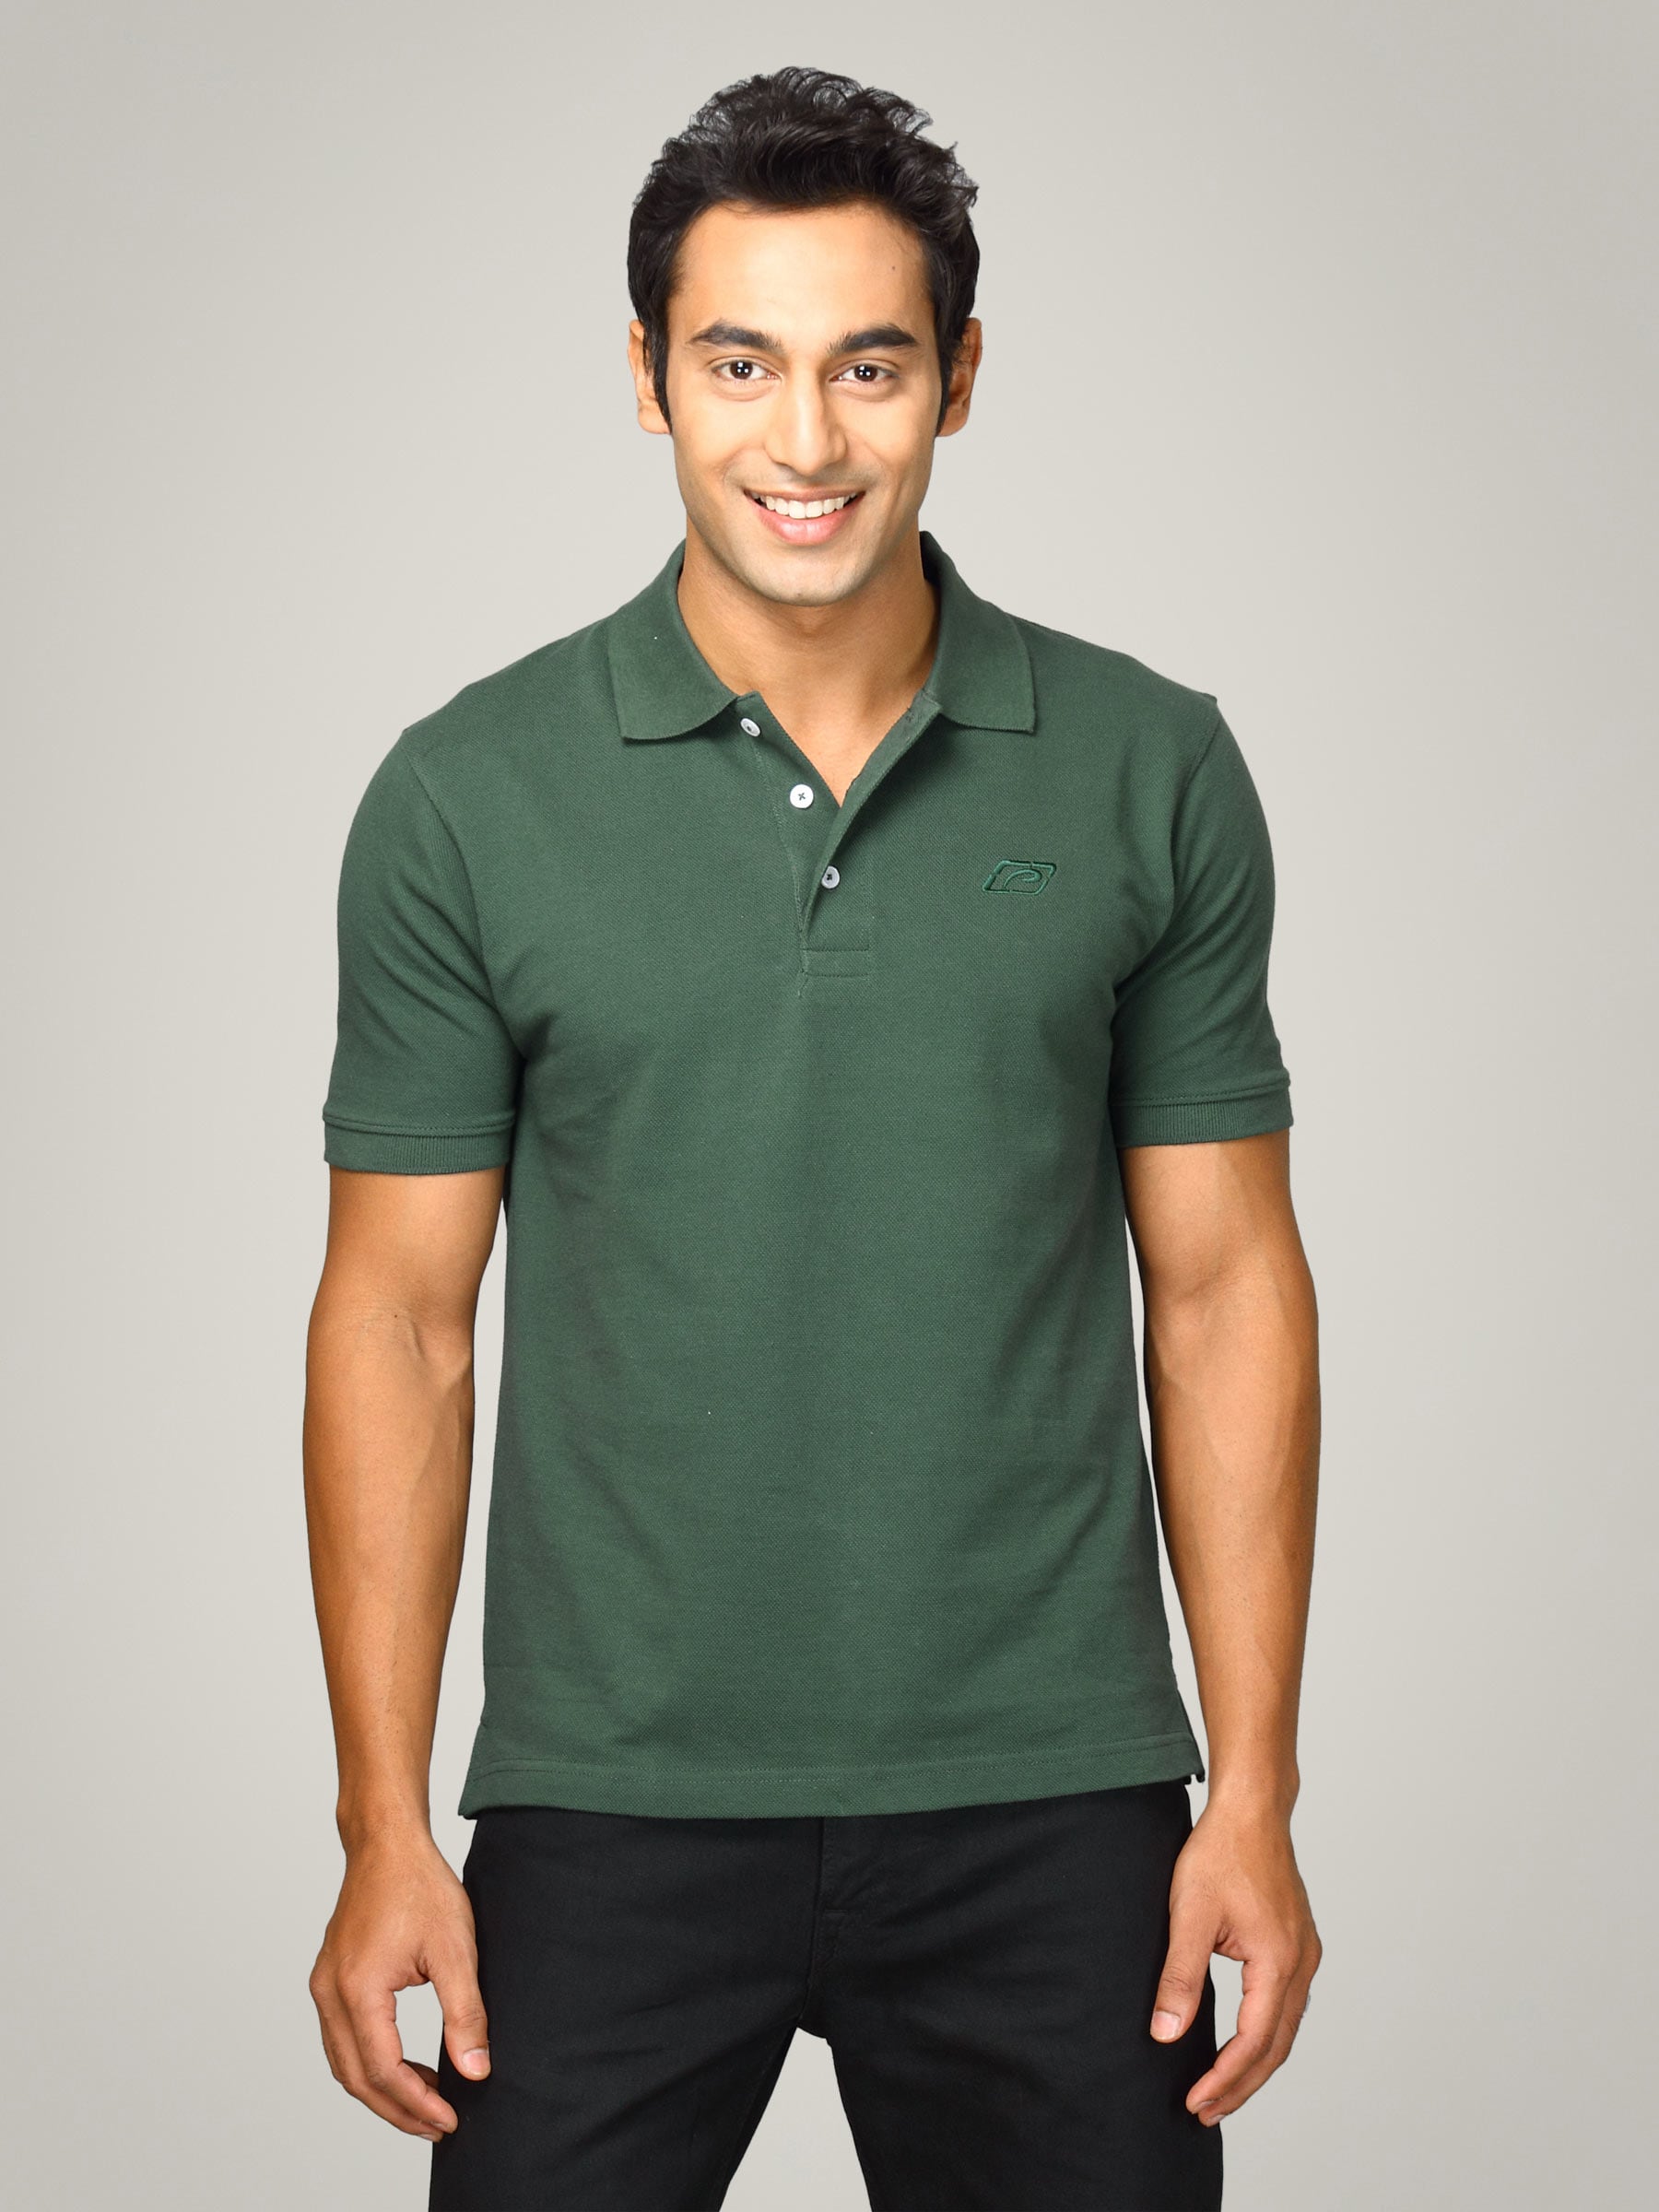 Proline Men Green Polo T-shirt